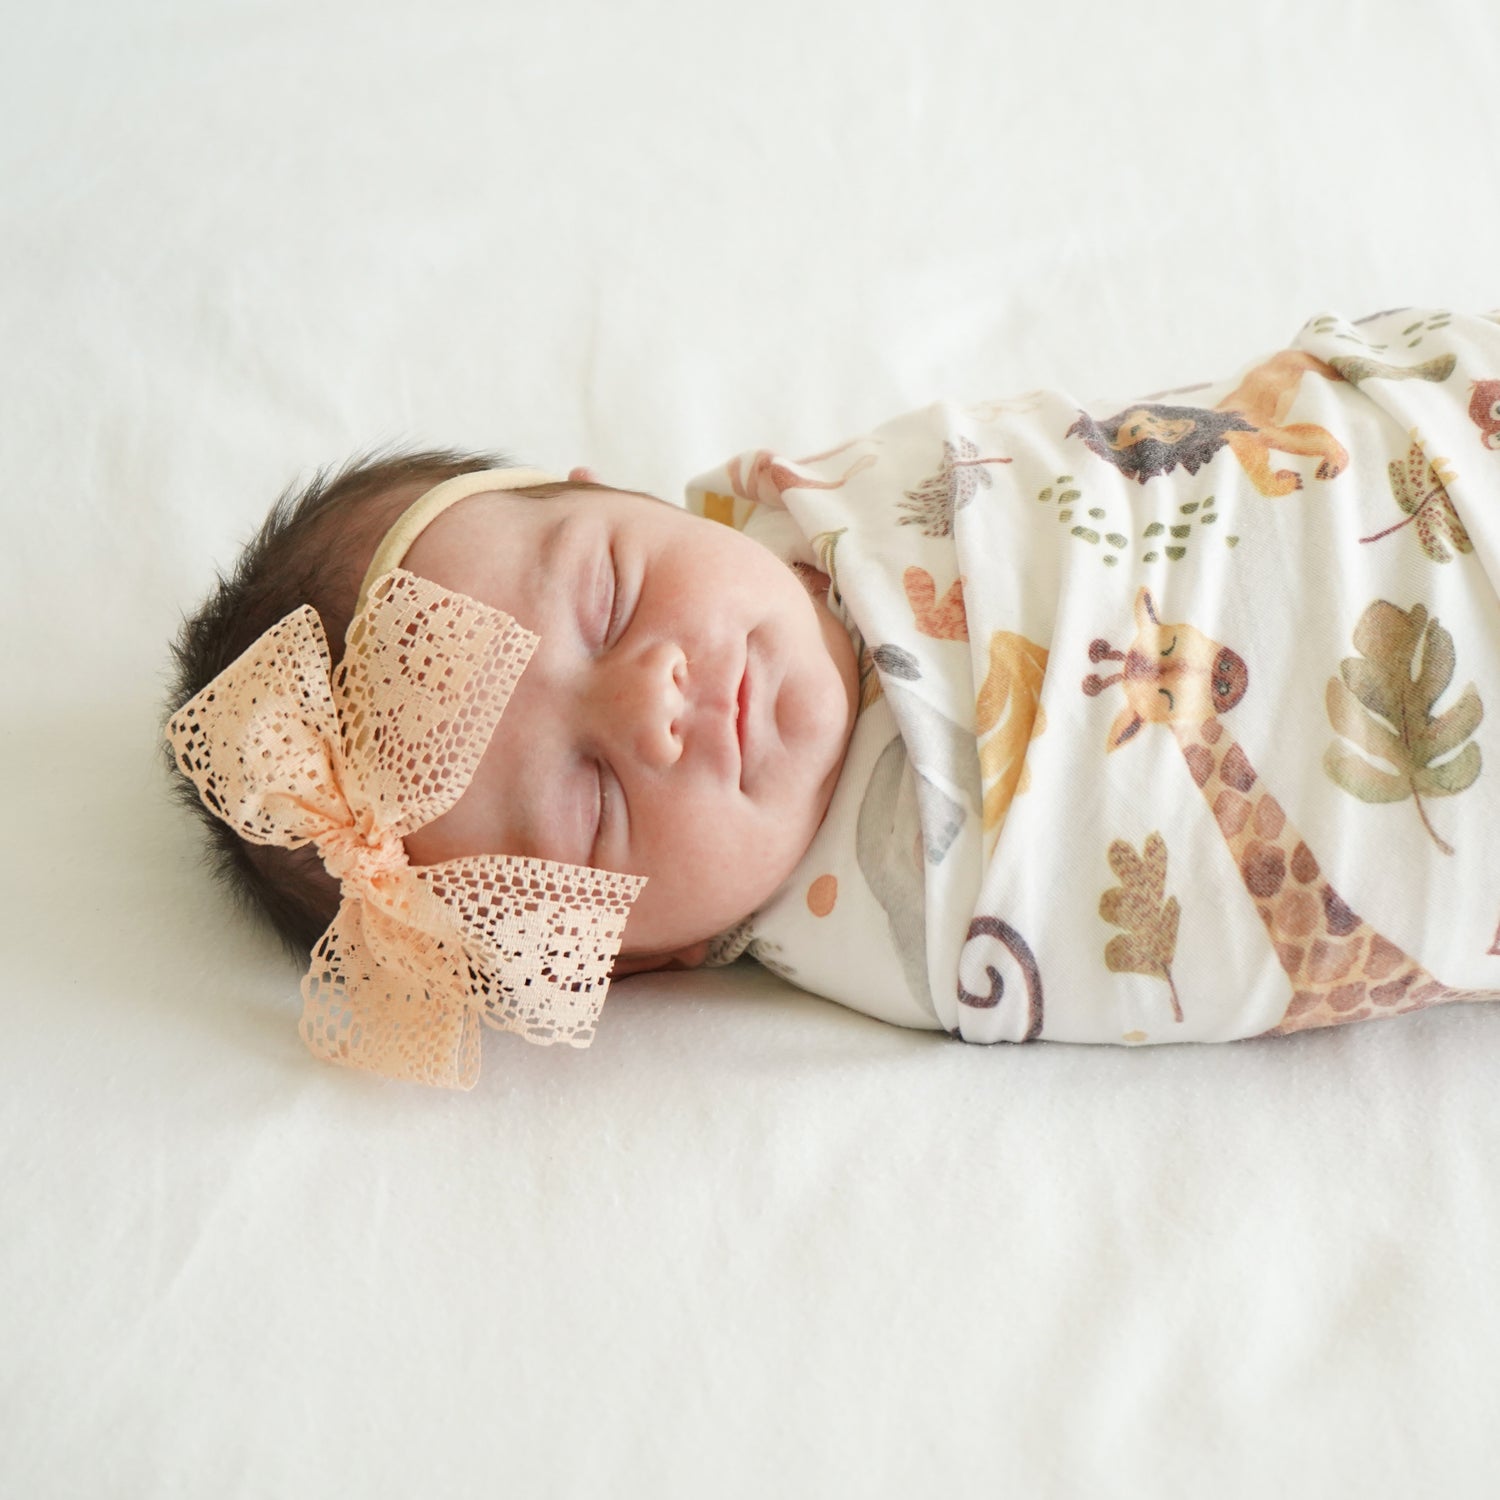 newborn peach lace harper bow on stretchy headband sleeping in safari animals swaddle